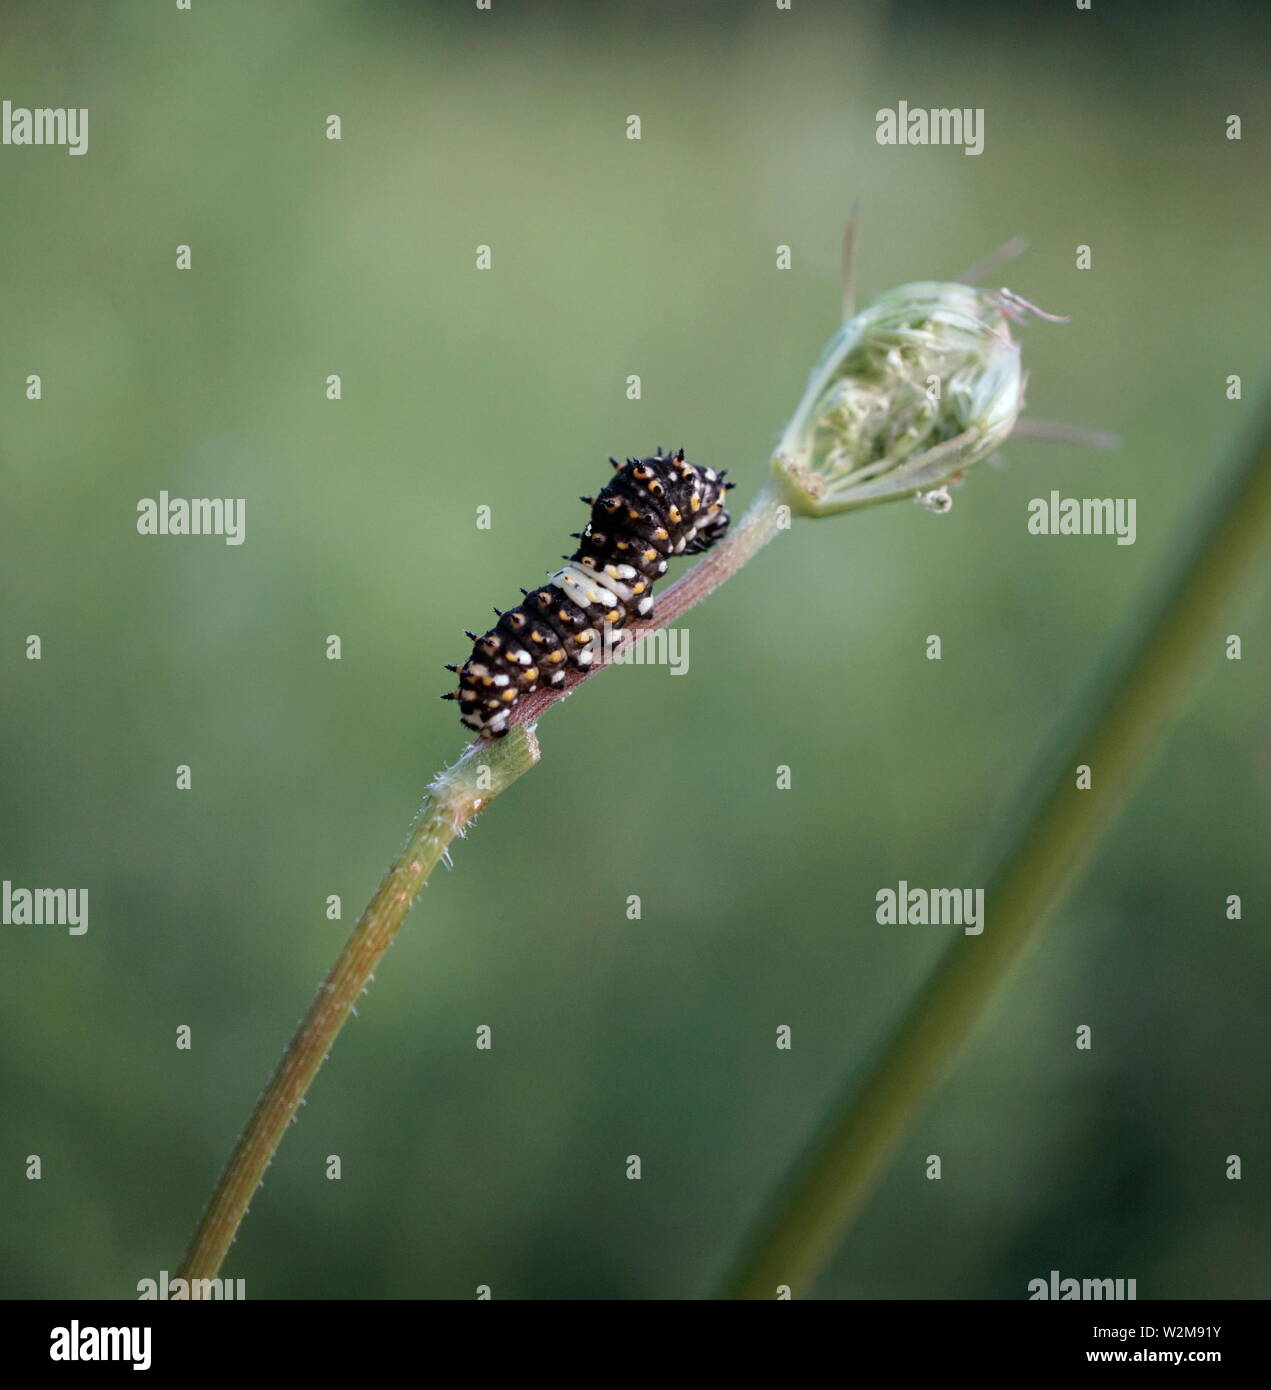 Especie Caterpillar (inmaduros) en un tallo Foto de stock